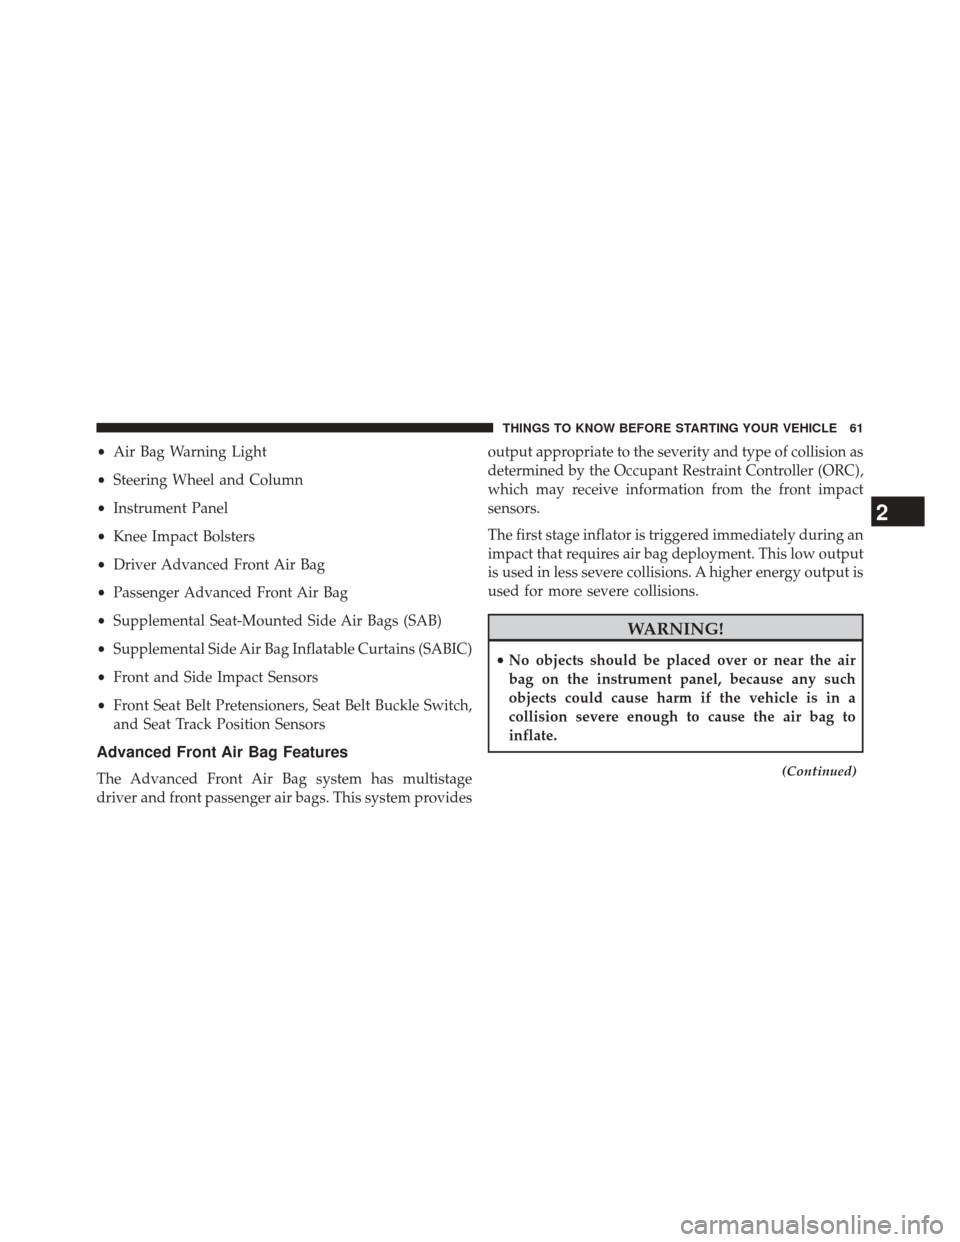 CHRYSLER 200 2014 1.G Repair Manual •Air Bag Warning Light
• Steering Wheel and Column
• Instrument Panel
• Knee Impact Bolsters
• Driver Advanced Front Air Bag
• Passenger Advanced Front Air Bag
• Supplemental Seat-Mounte